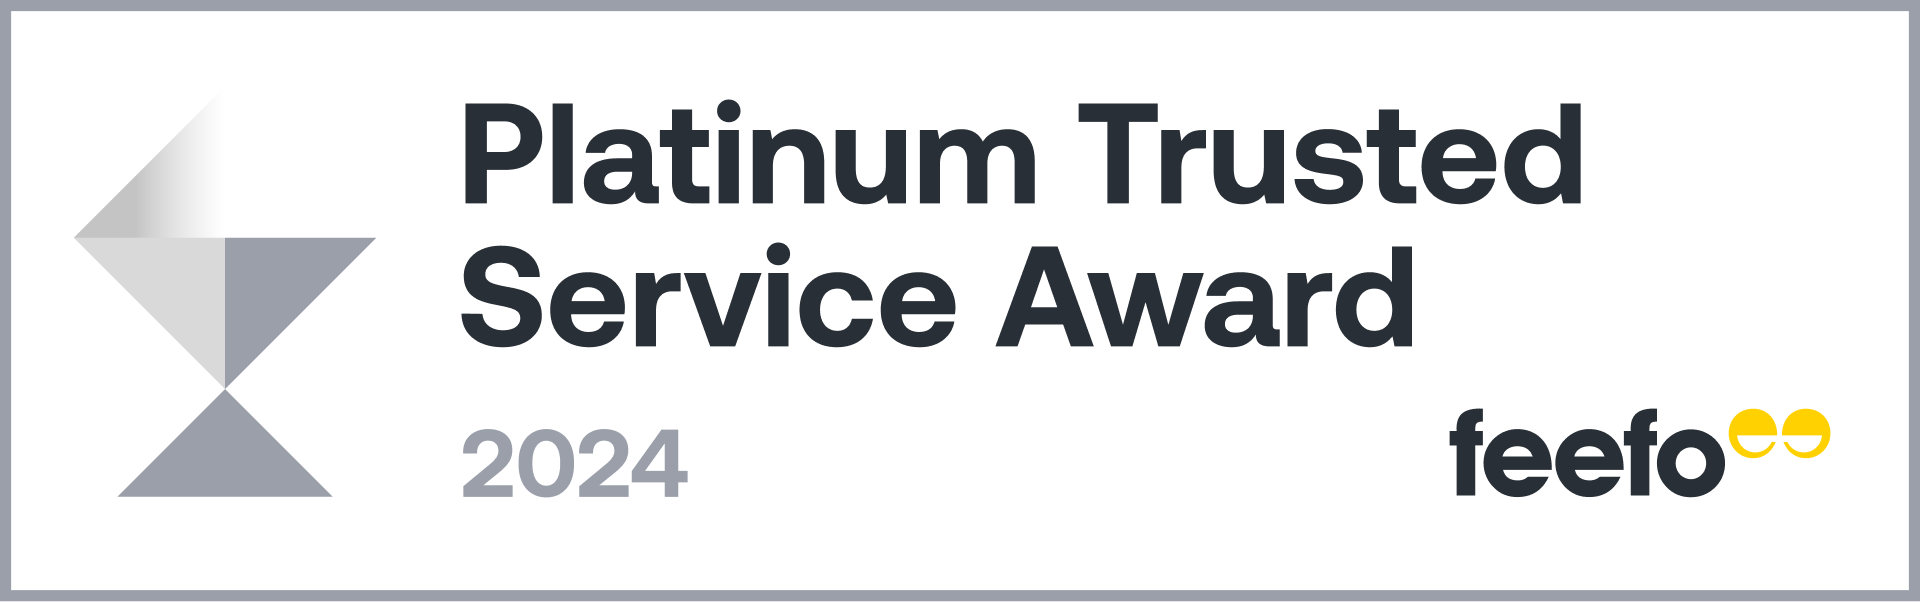 Feefo Platinium Trusted Service Award 2024